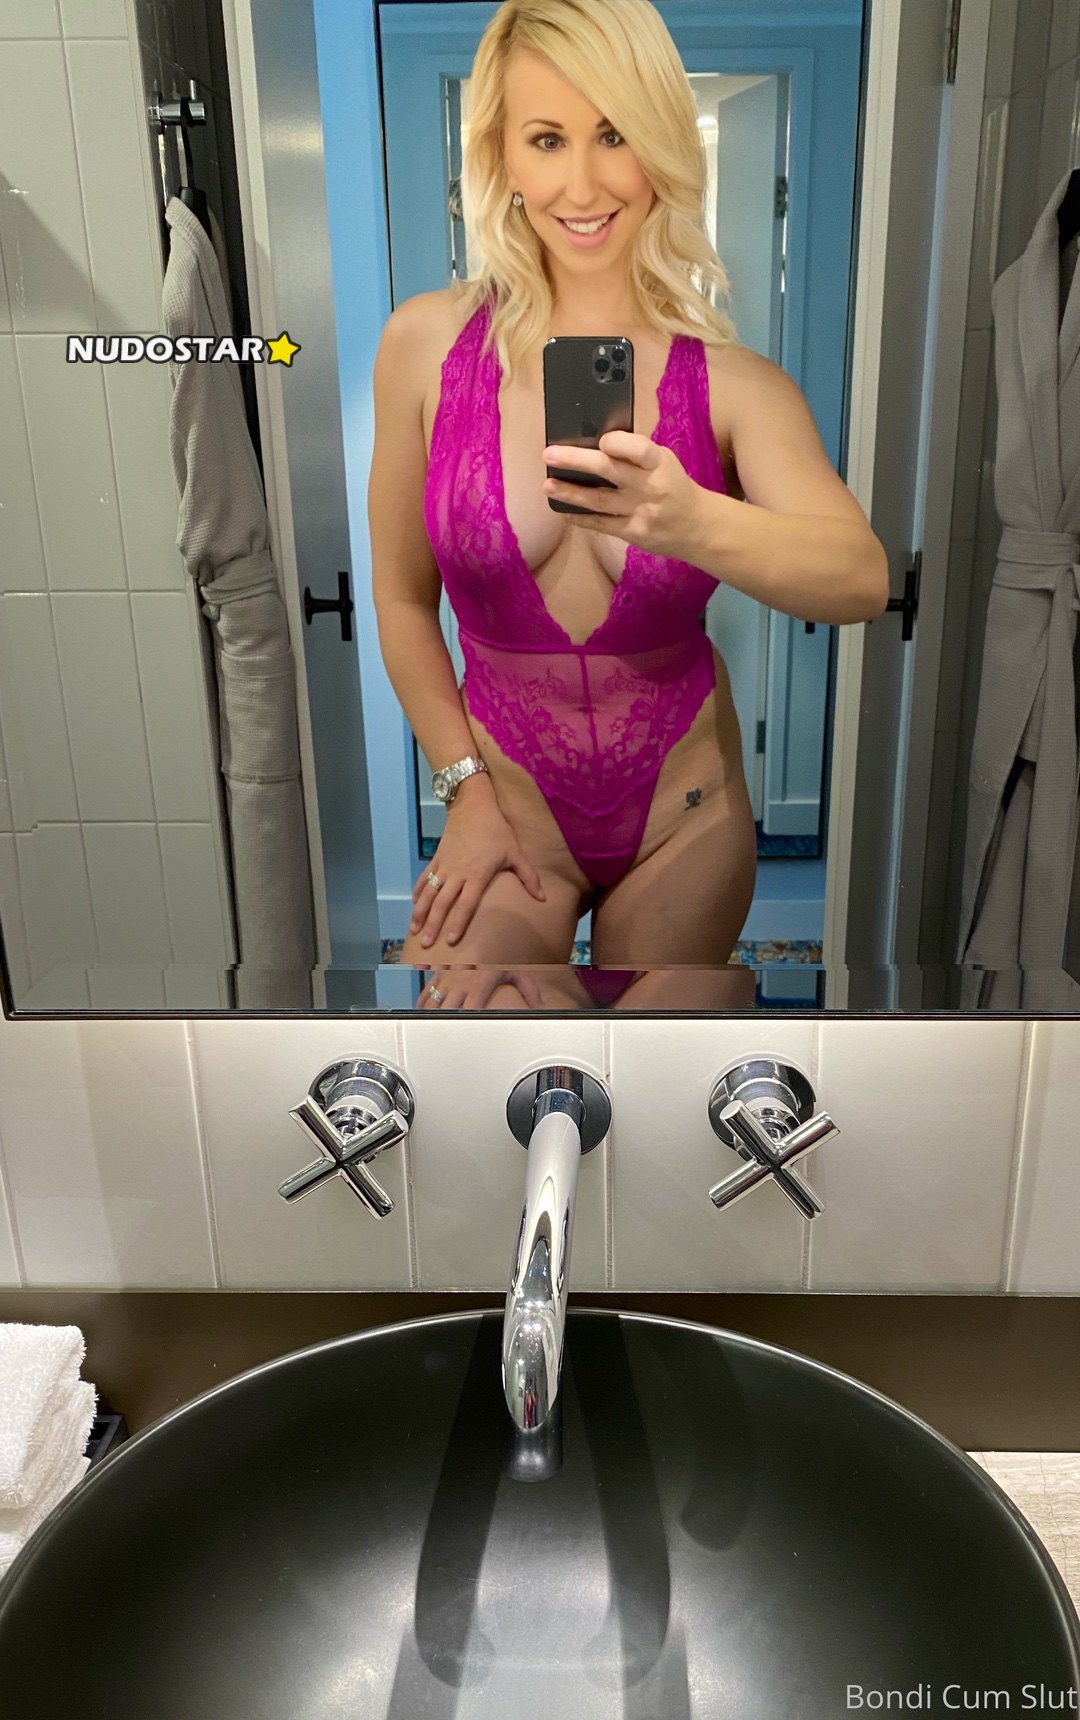 Bondi Cum Slut – bondicumslut Onlyfans Nudes Leaks (128 photos + 6 videos)